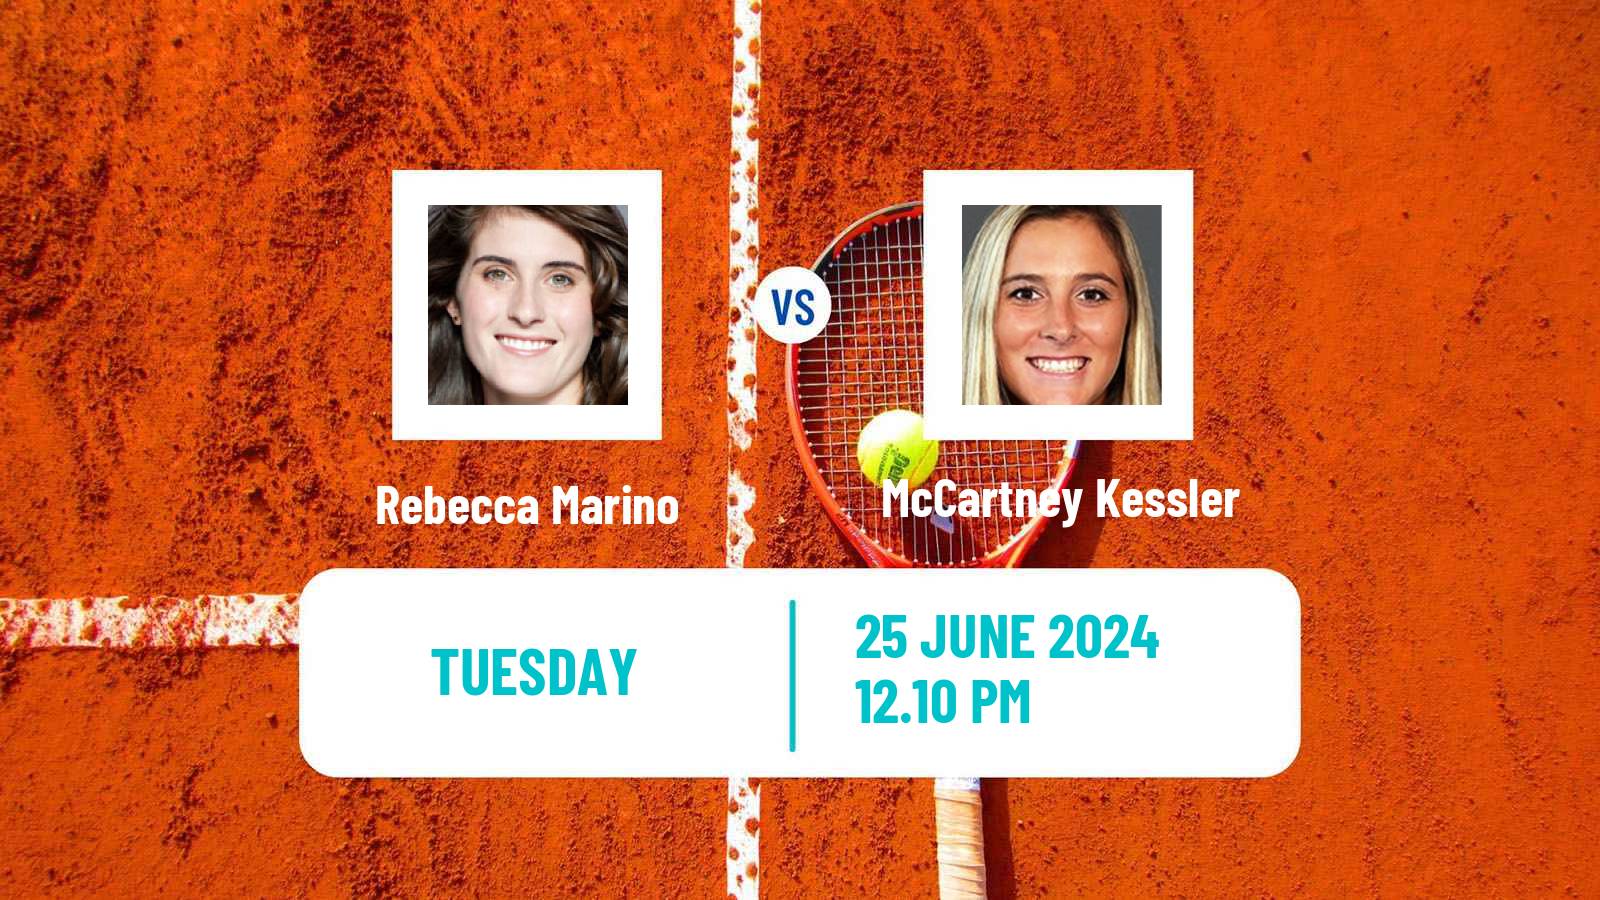 Tennis WTA Wimbledon Rebecca Marino - McCartney Kessler